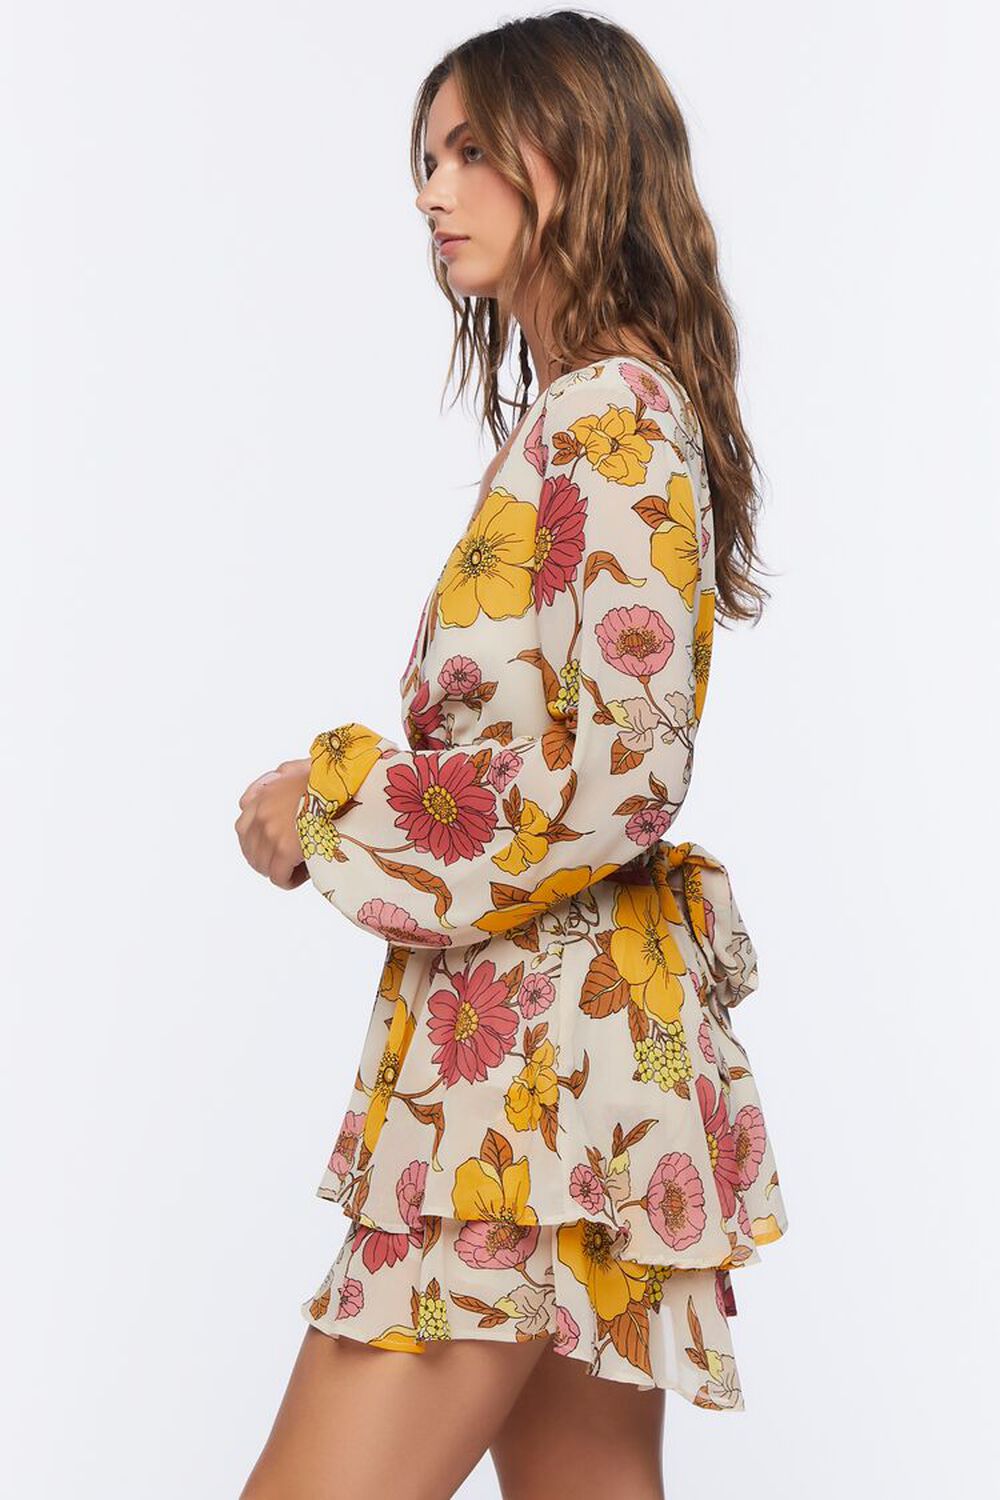 TAUPE/MULTI Floral Print Chiffon Mini Dress, image 2